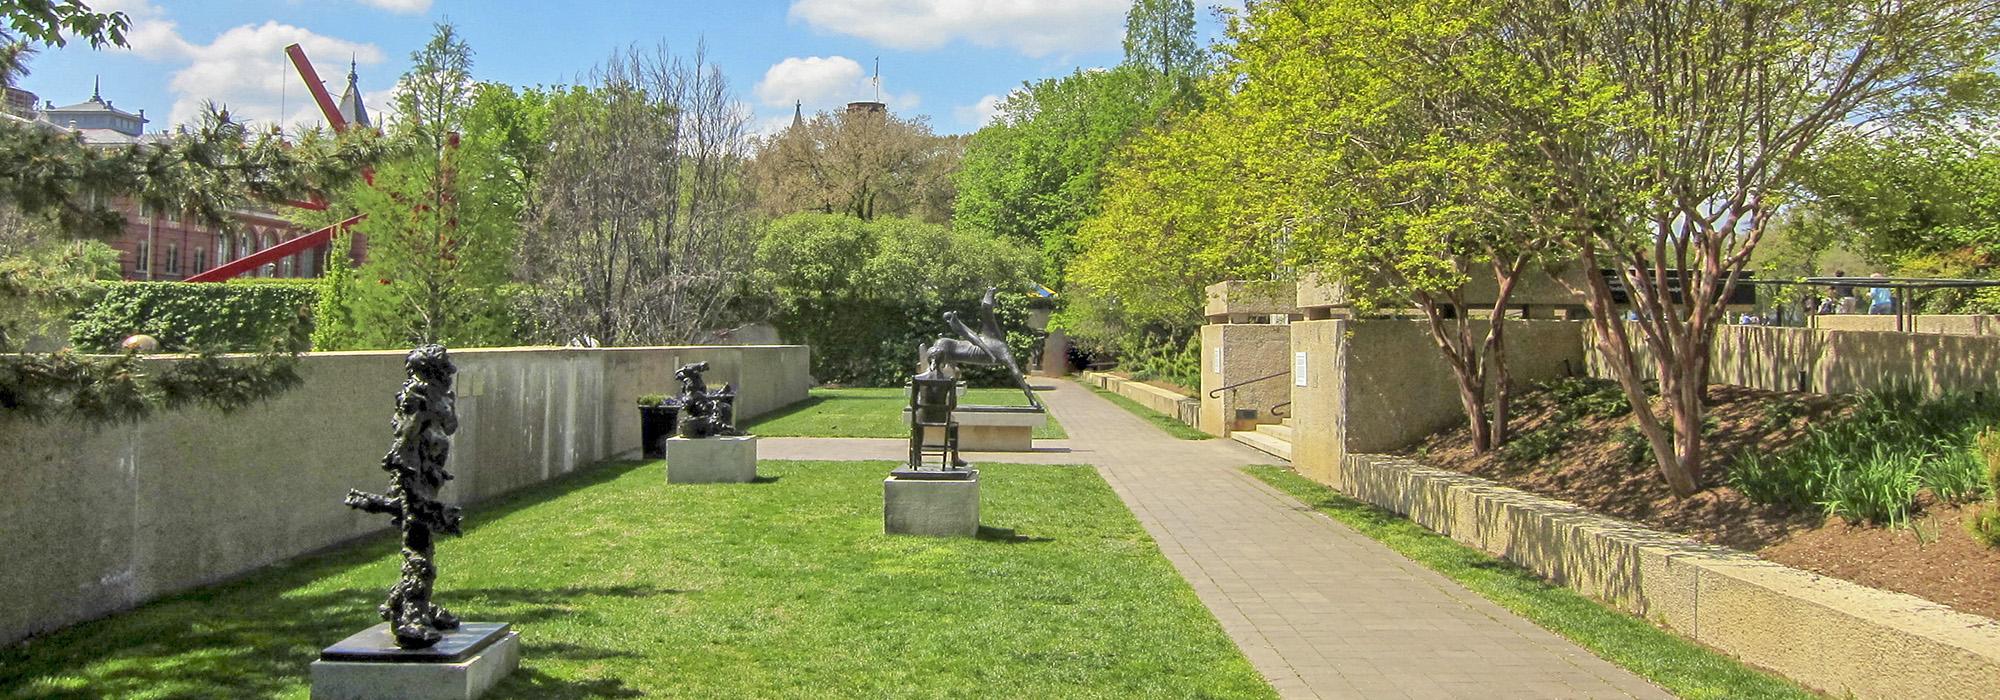 Hirshhorn Sculpture Garden, Washington, D.C.